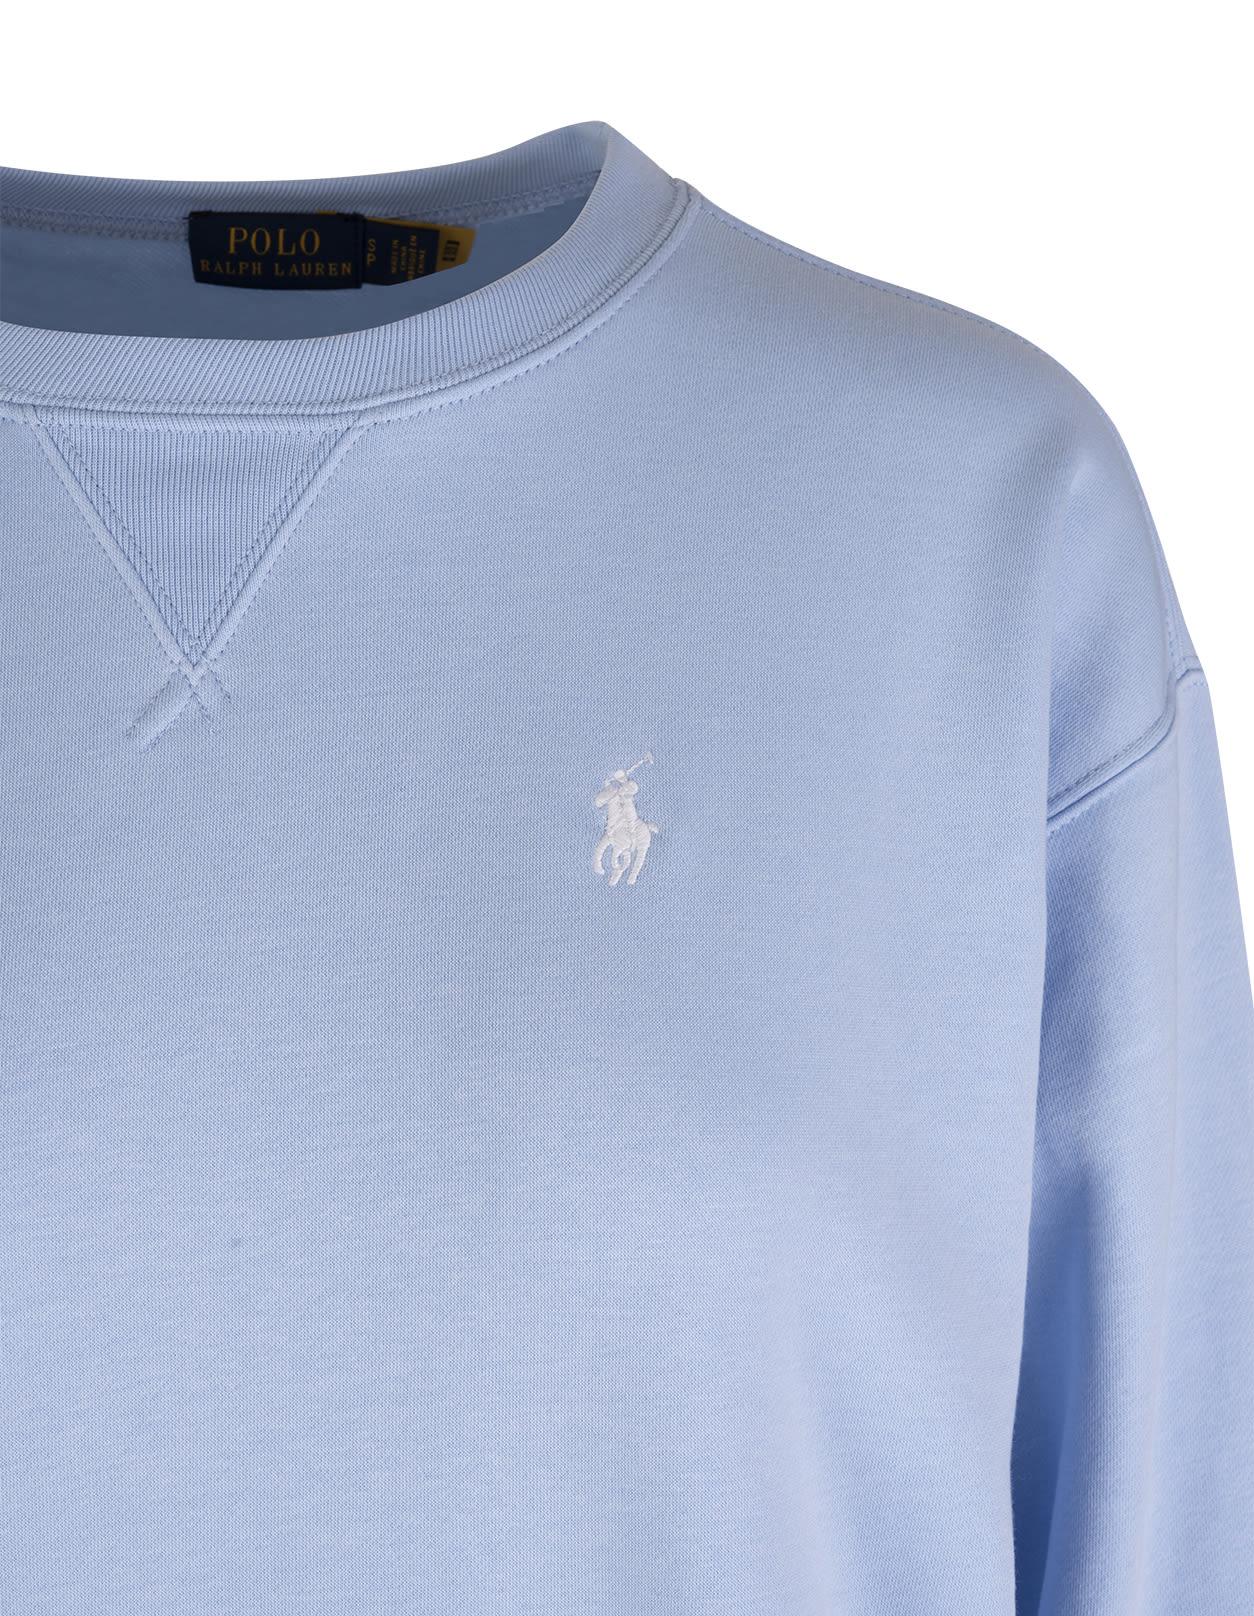 Polo Ralph Lauren Woman Sky Blue Crewneck Sweatshirt With White Pony | Lyst